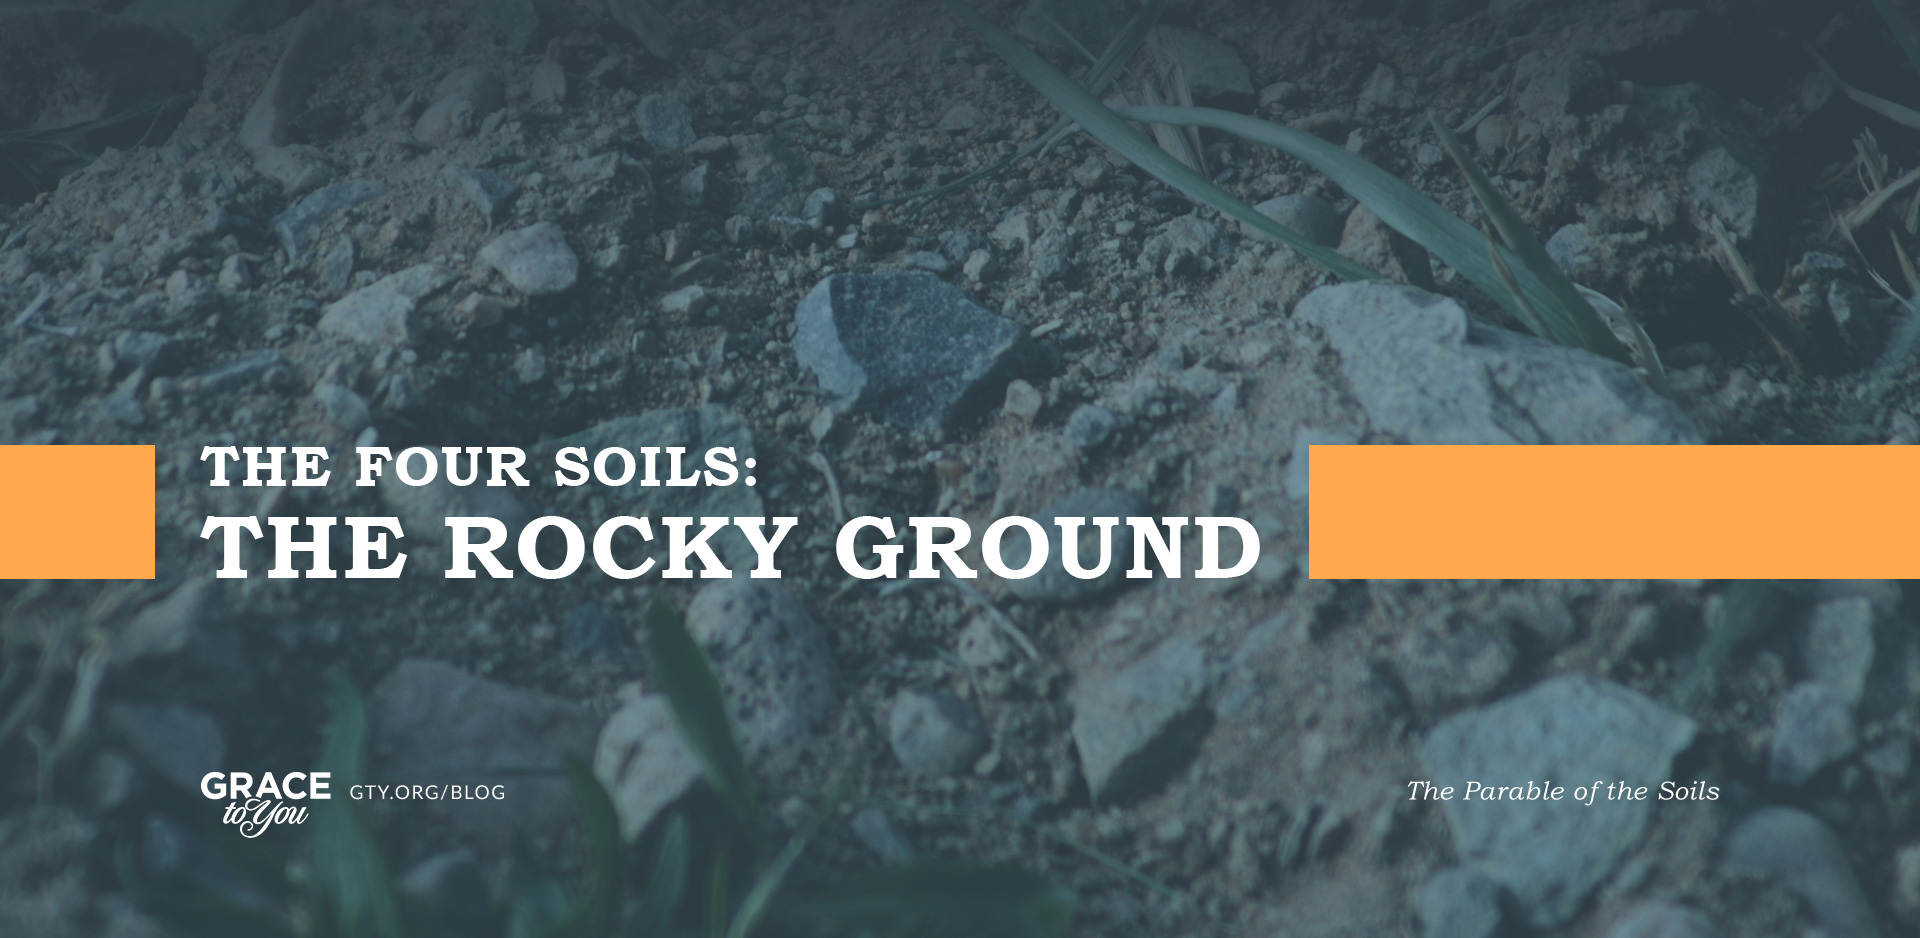 The Four Soils: The Rocky Ground